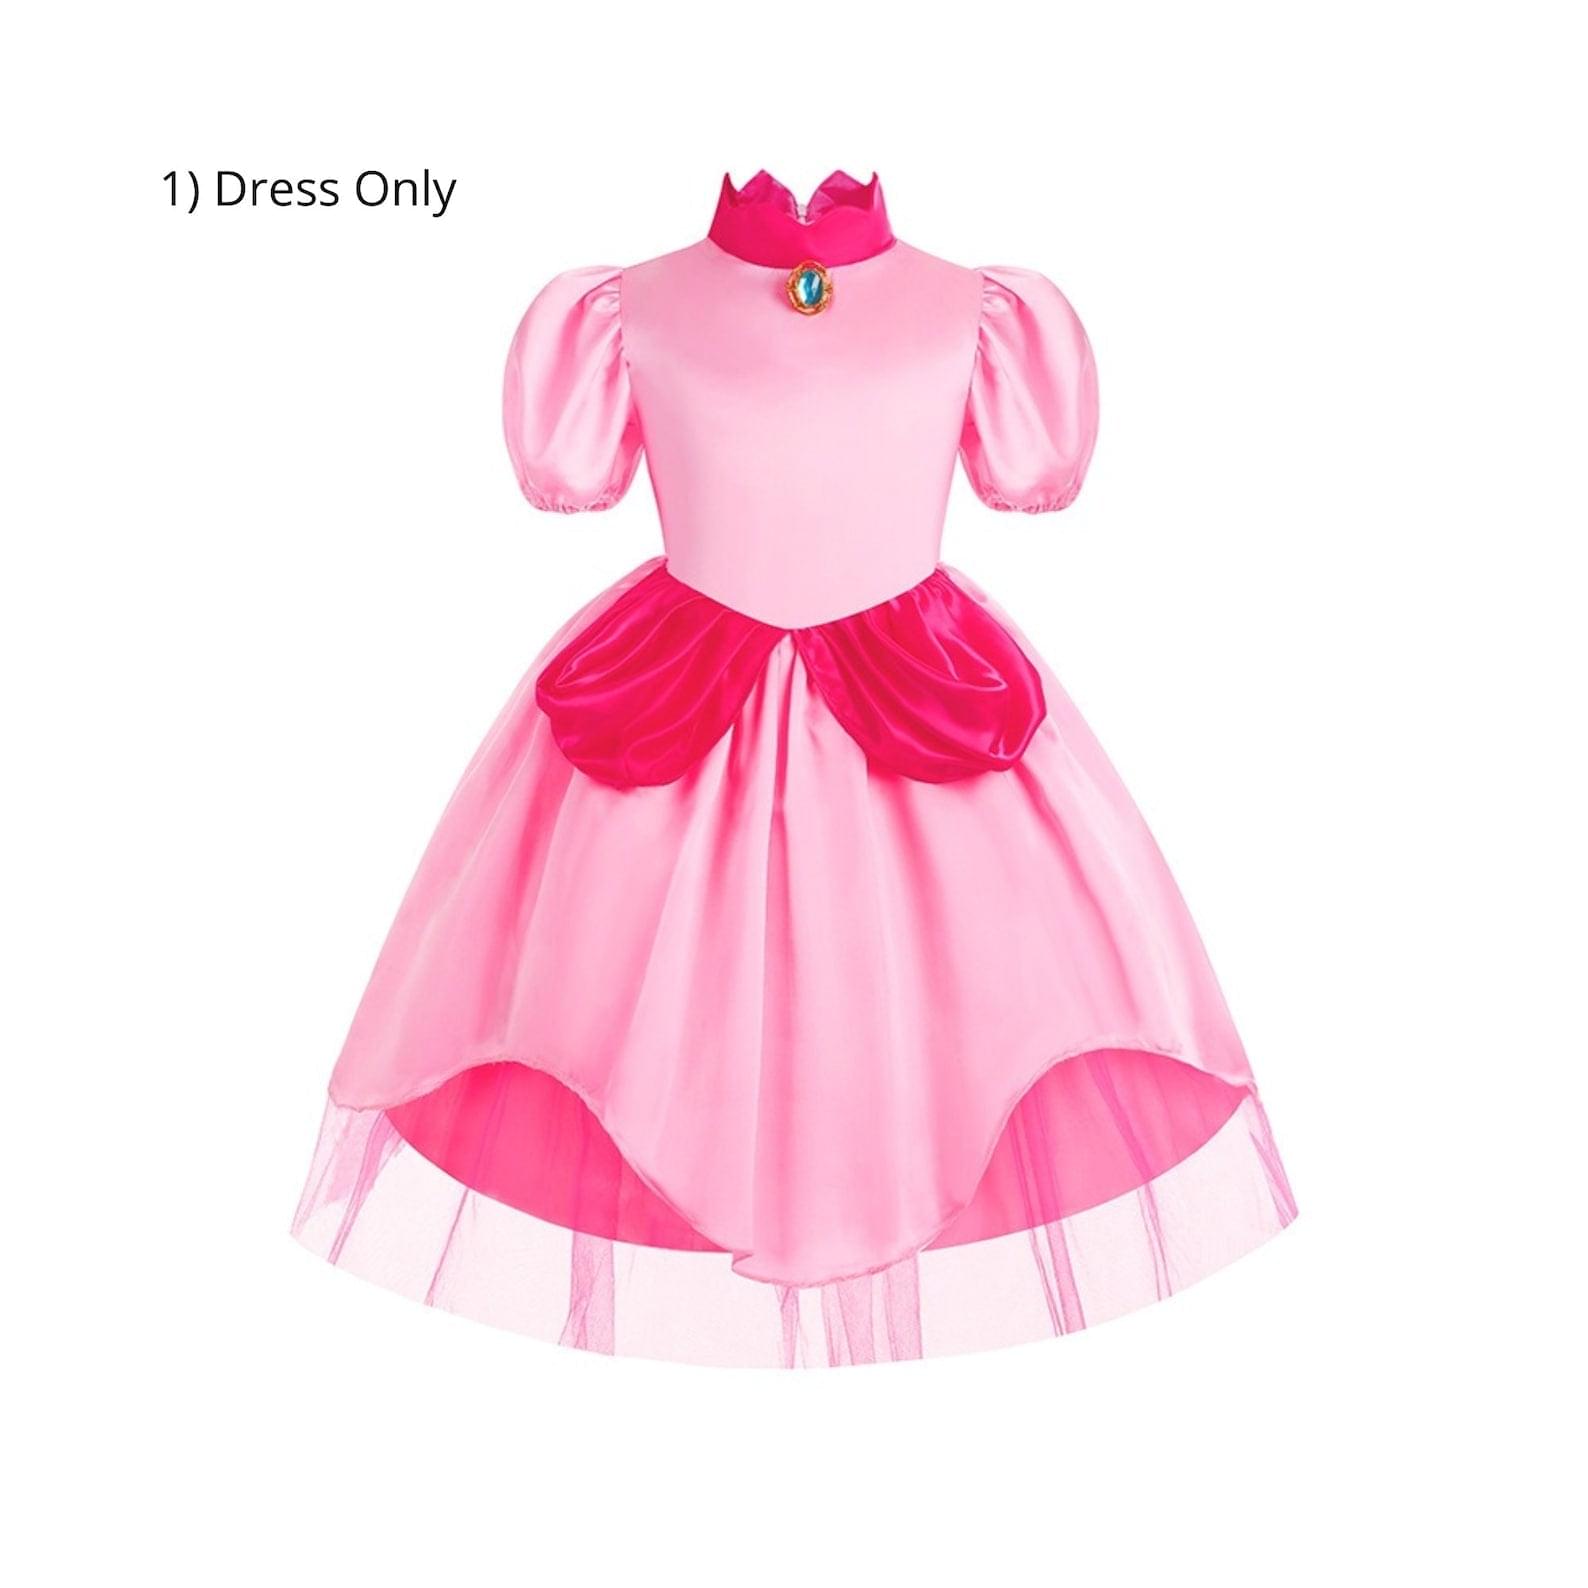 Disney-Inspired Mario Bros Princess Peach Dress, Perfect for Halloween and Birthdays Dress Only